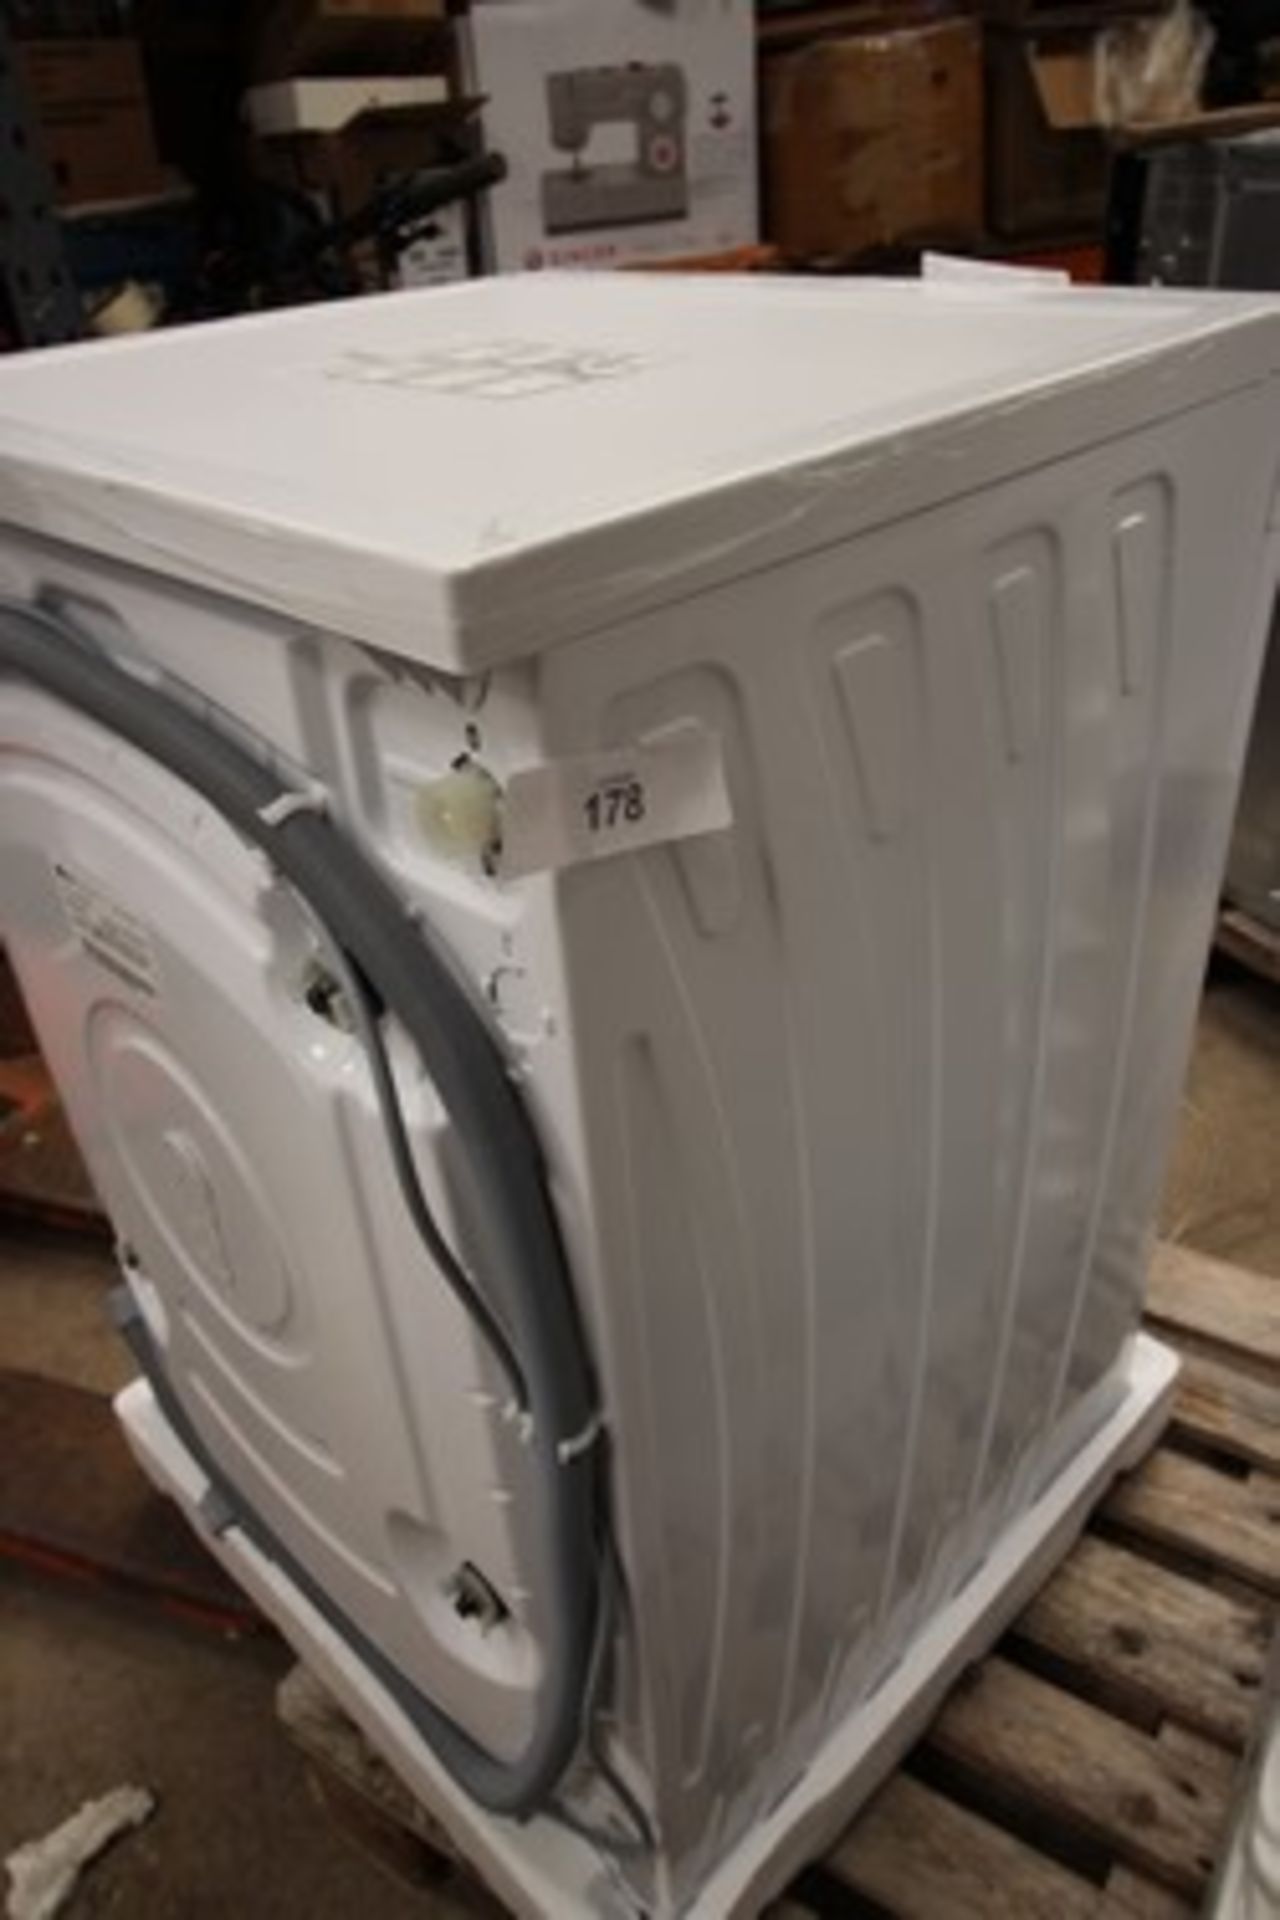 1 x LG 9kg washing machine, Model F4T209WSE - New (eBay 5) - Image 3 of 3